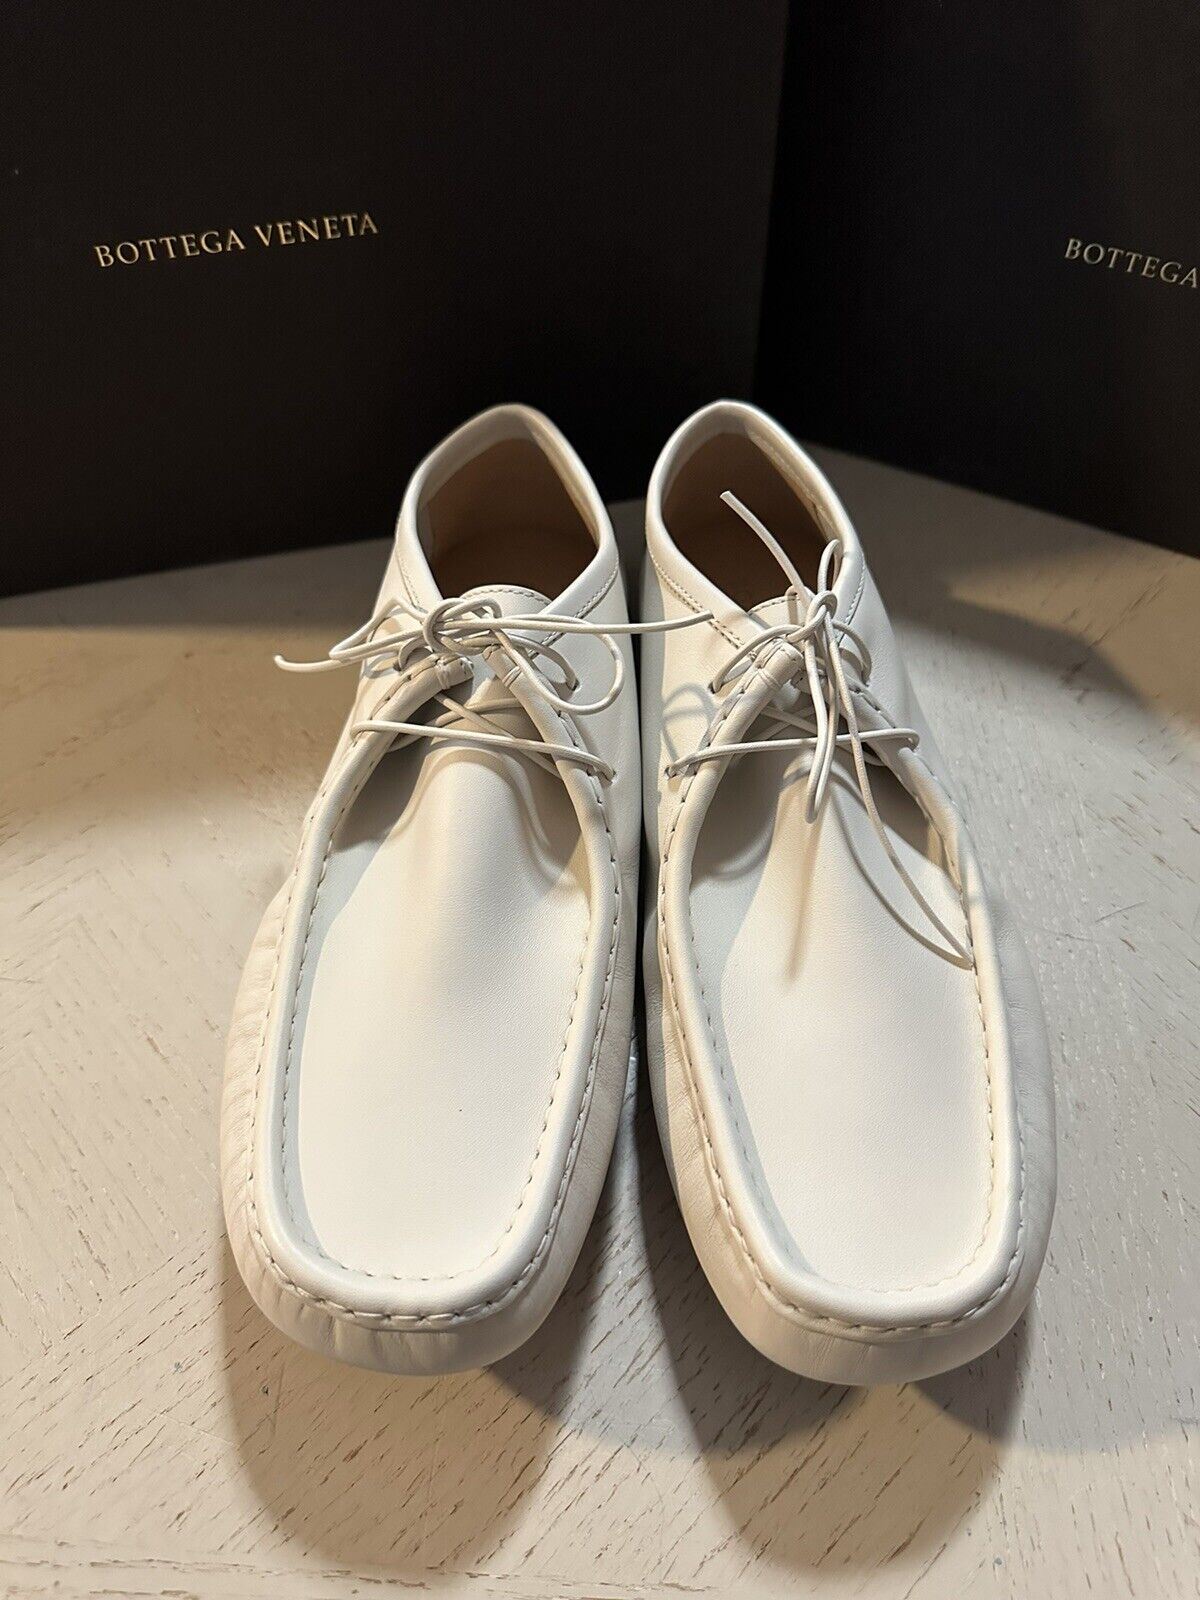 New $760 Bottega Venetta Men Leather Driver Loafers Shoes Cream 9.5 US/42.5 Eu